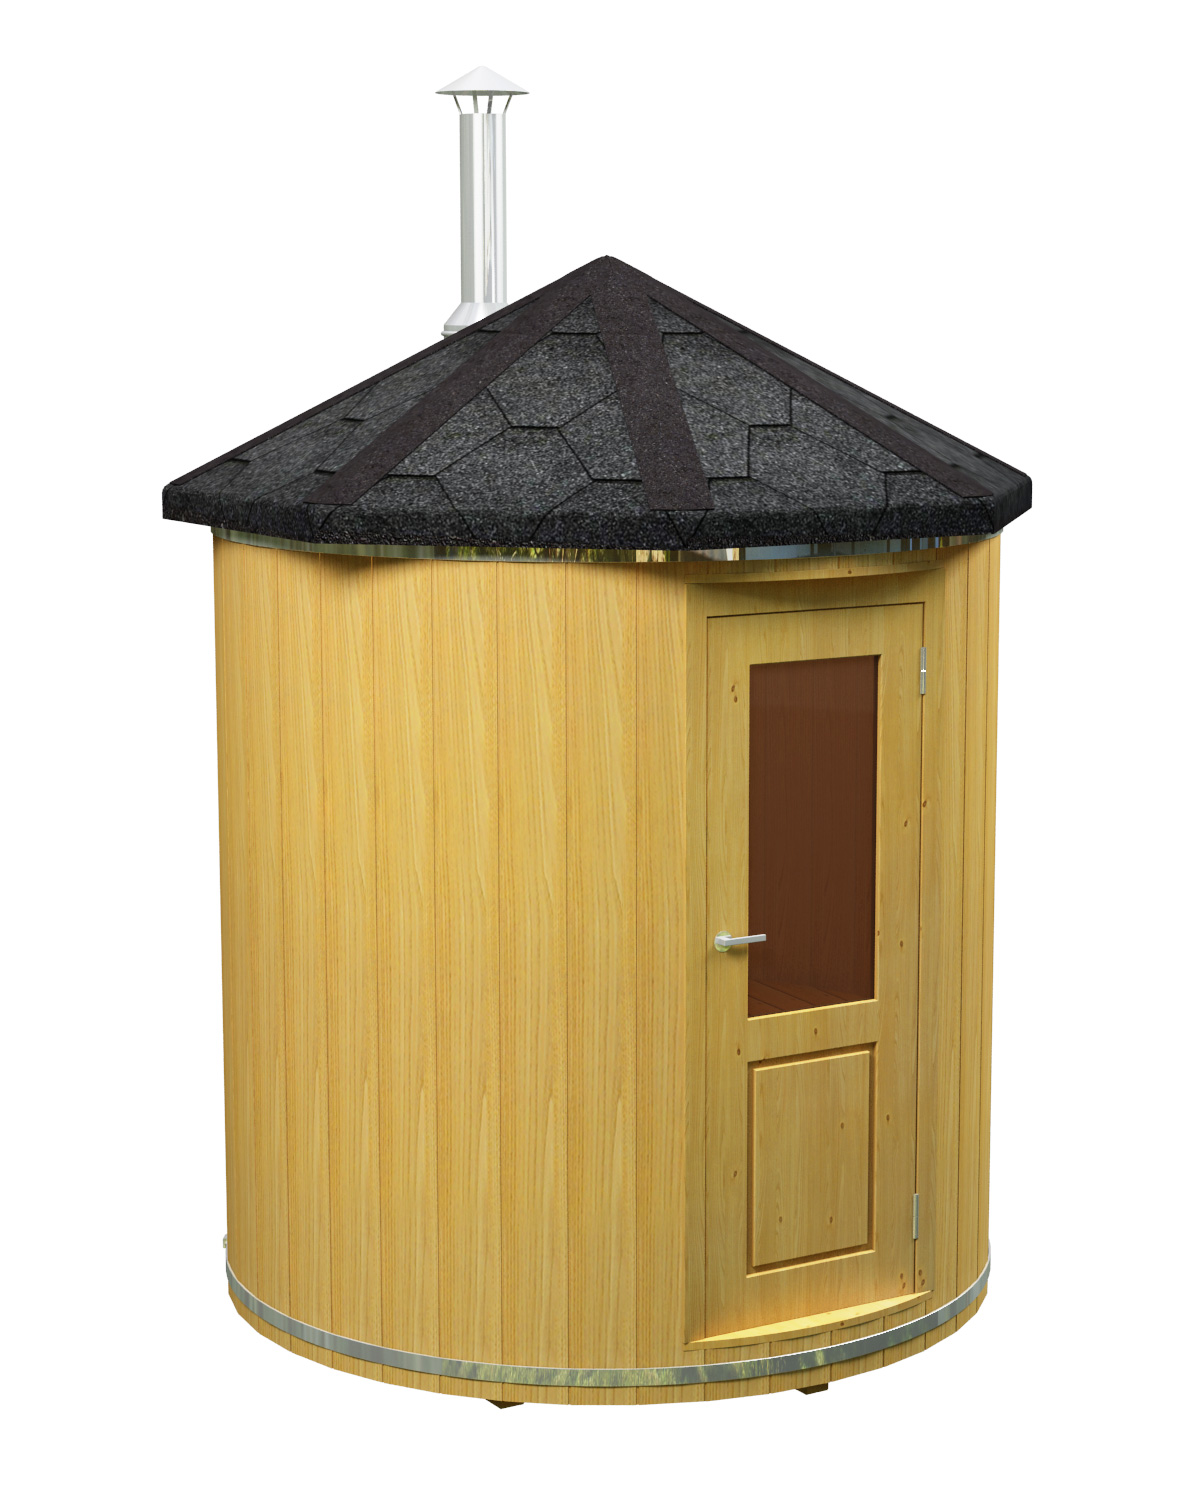 Sauna Vertikal